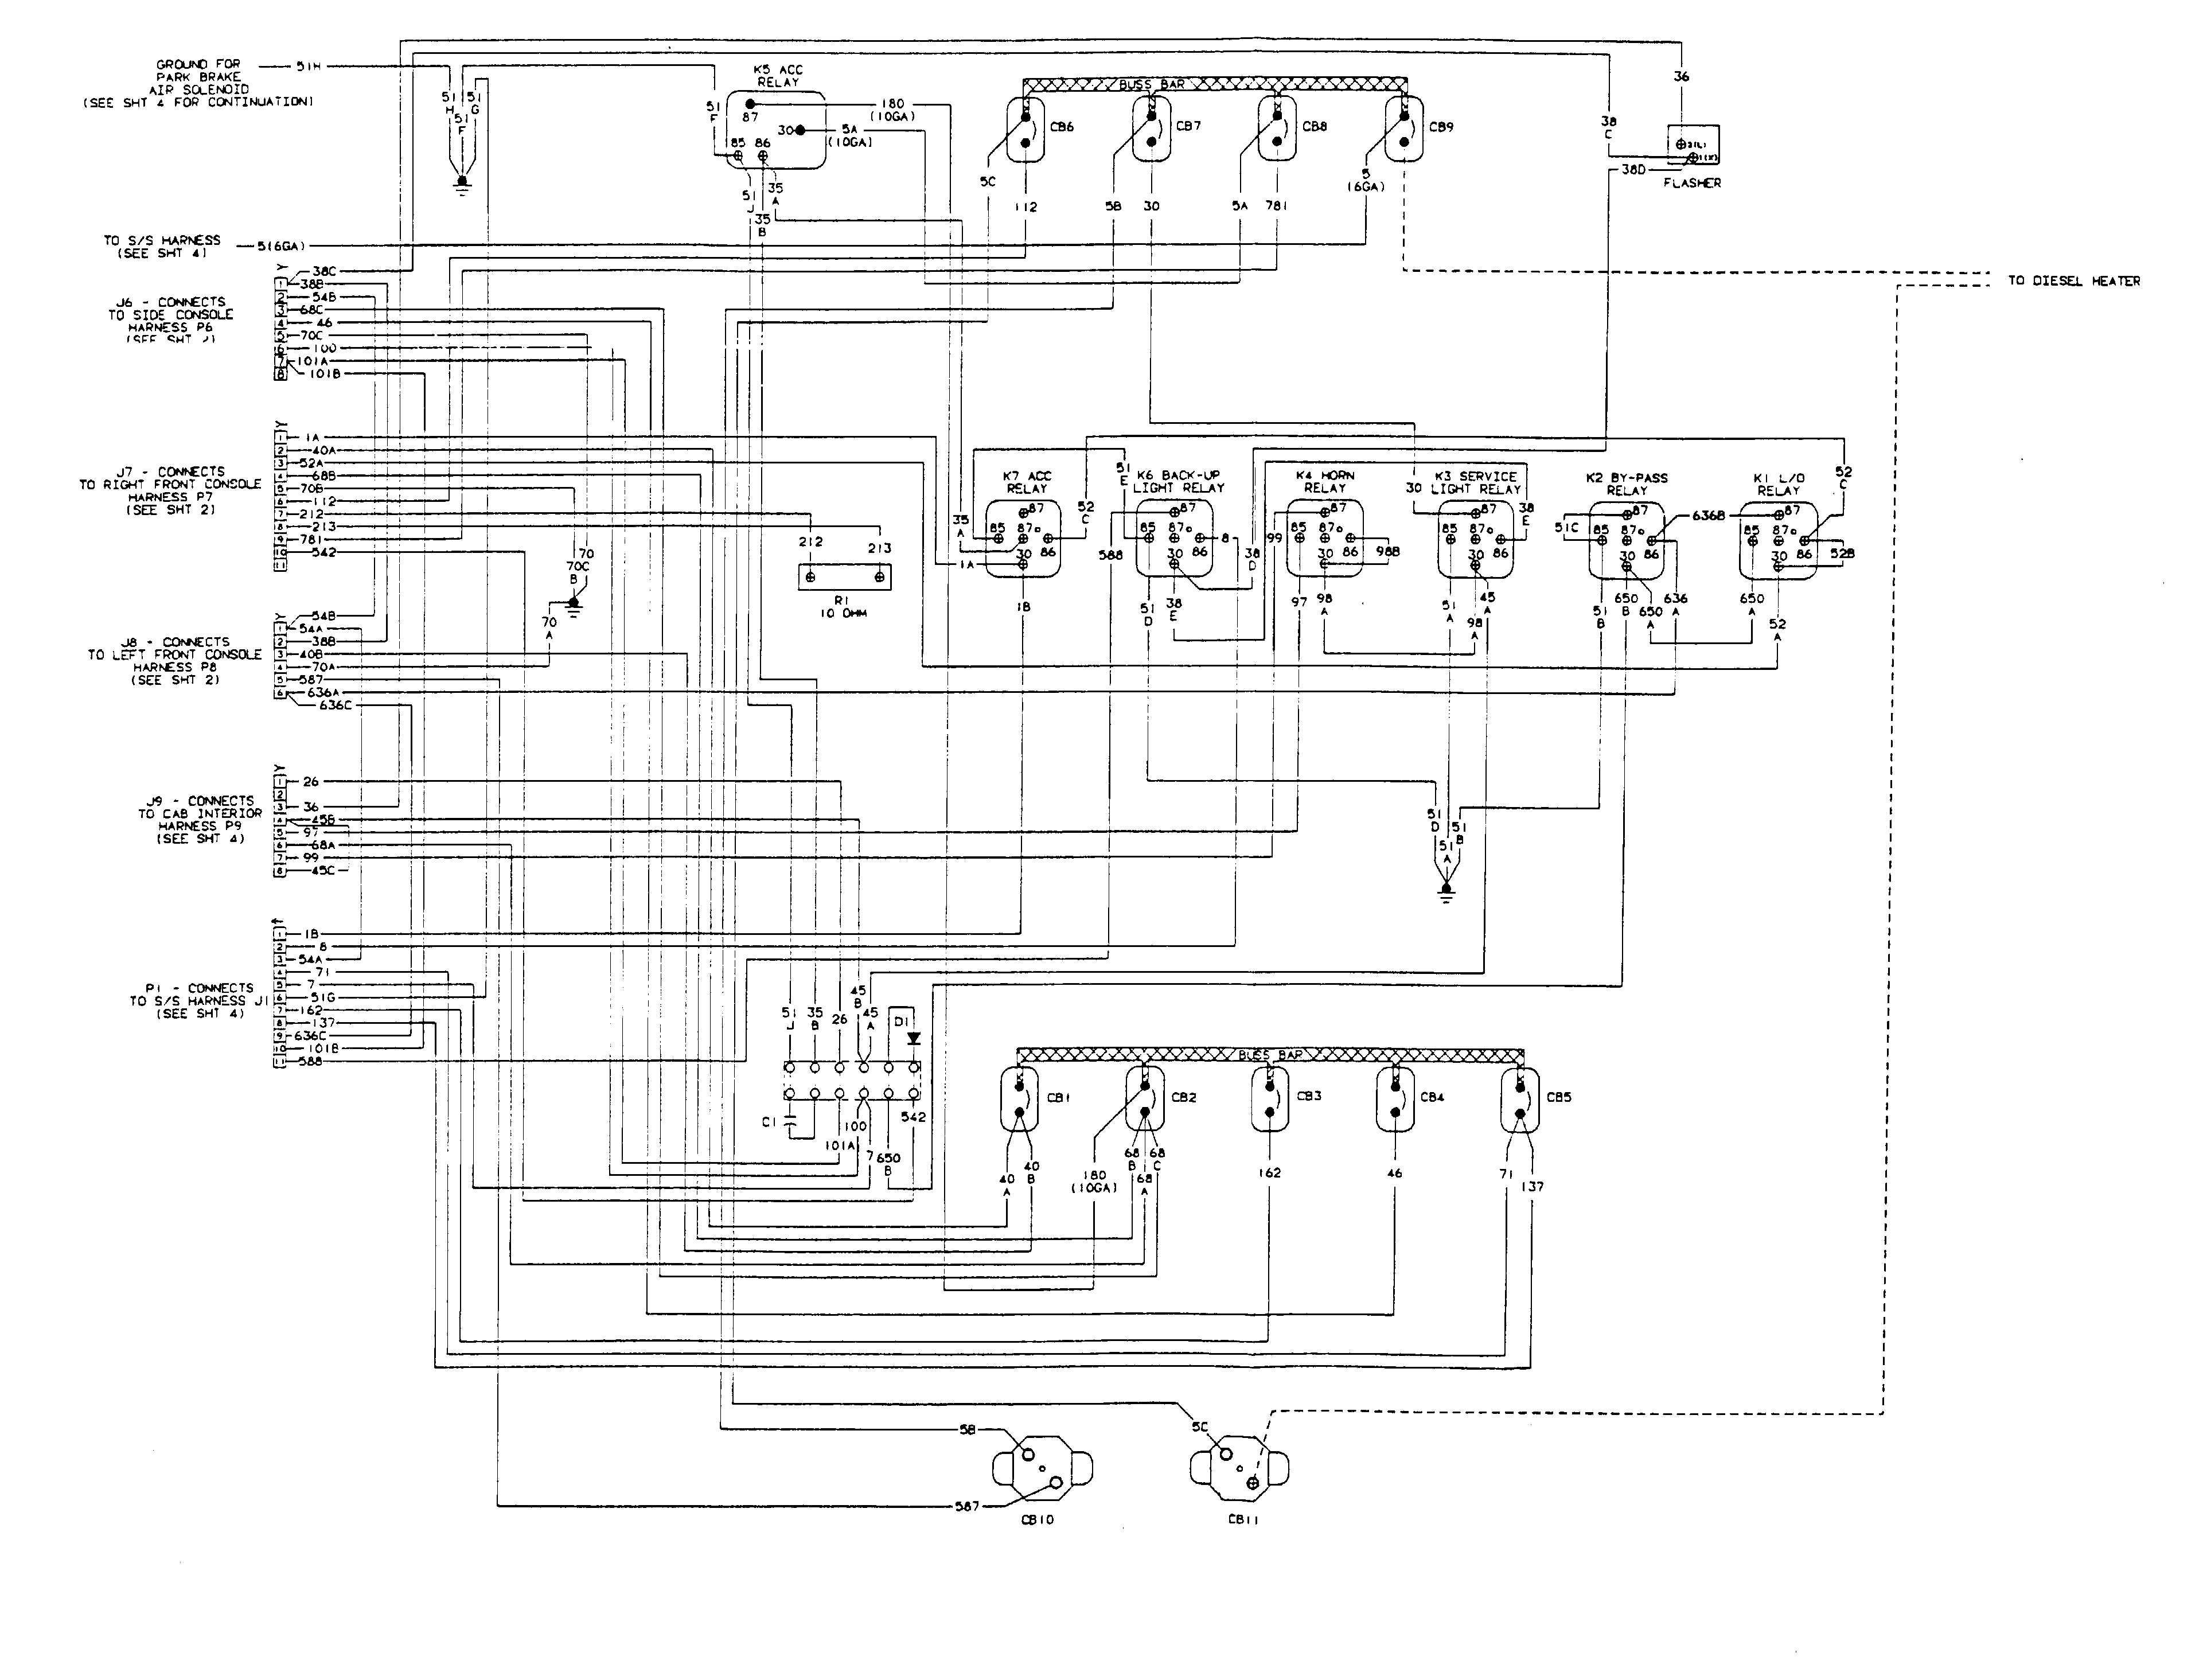 crane pendant wiring auto electrical wiring diagram u2022 rh focusnews co Multiple Light Switch Wiring Diagrams